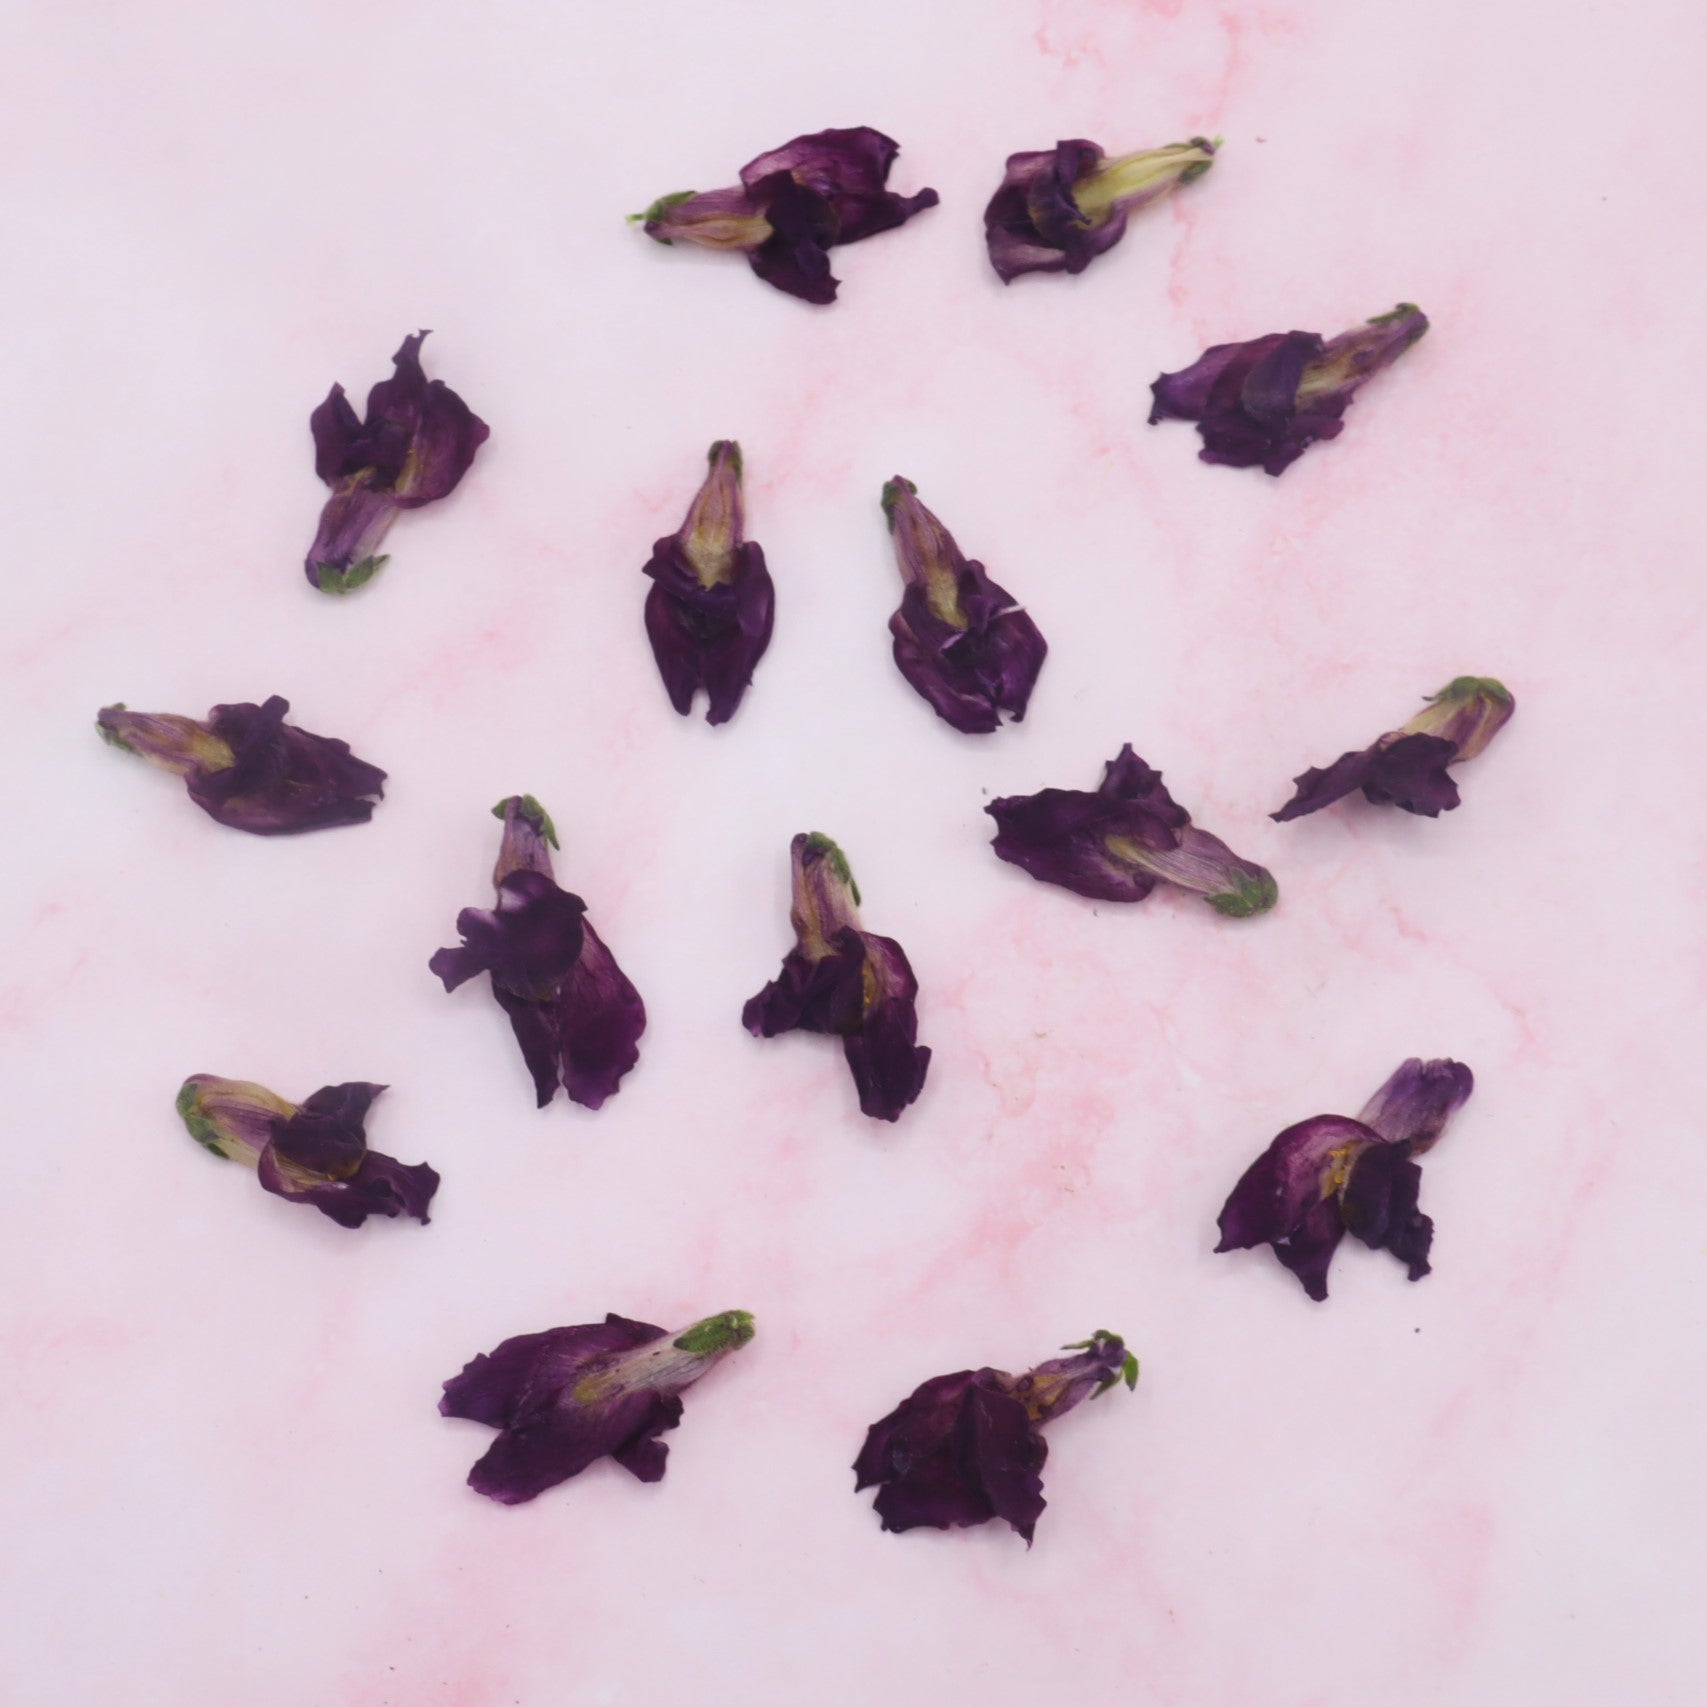 Gevriesdroogde leeuwenbek, edible freeze dried snapdragon, eetbare bloemen. Floral Delight online webshop 